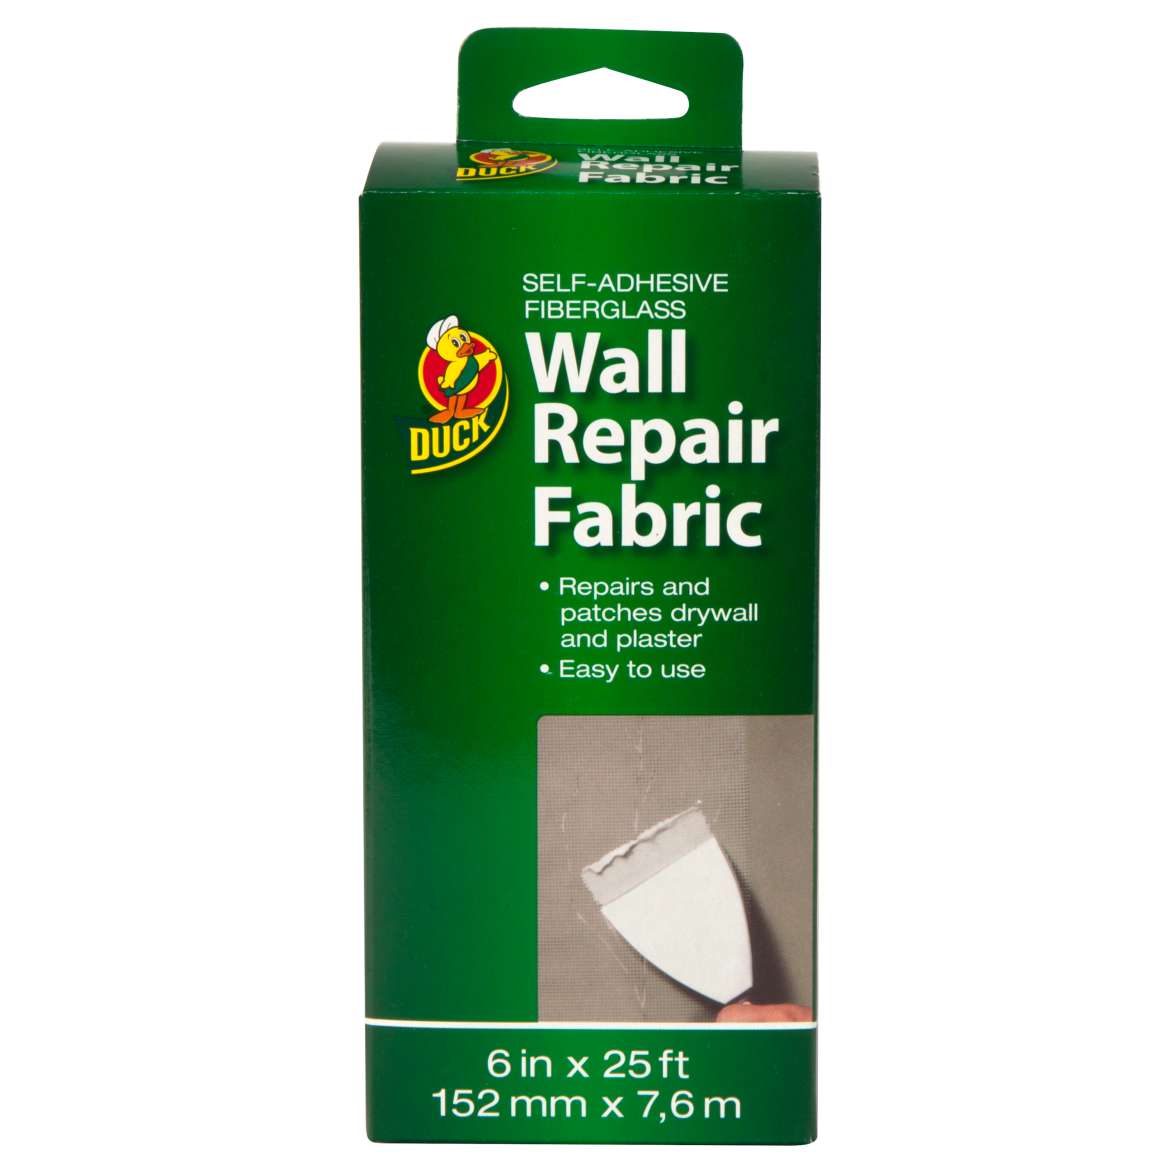 Duck Brand Wall Repair Fabric Self-Adhesive Fiberglass Fabric